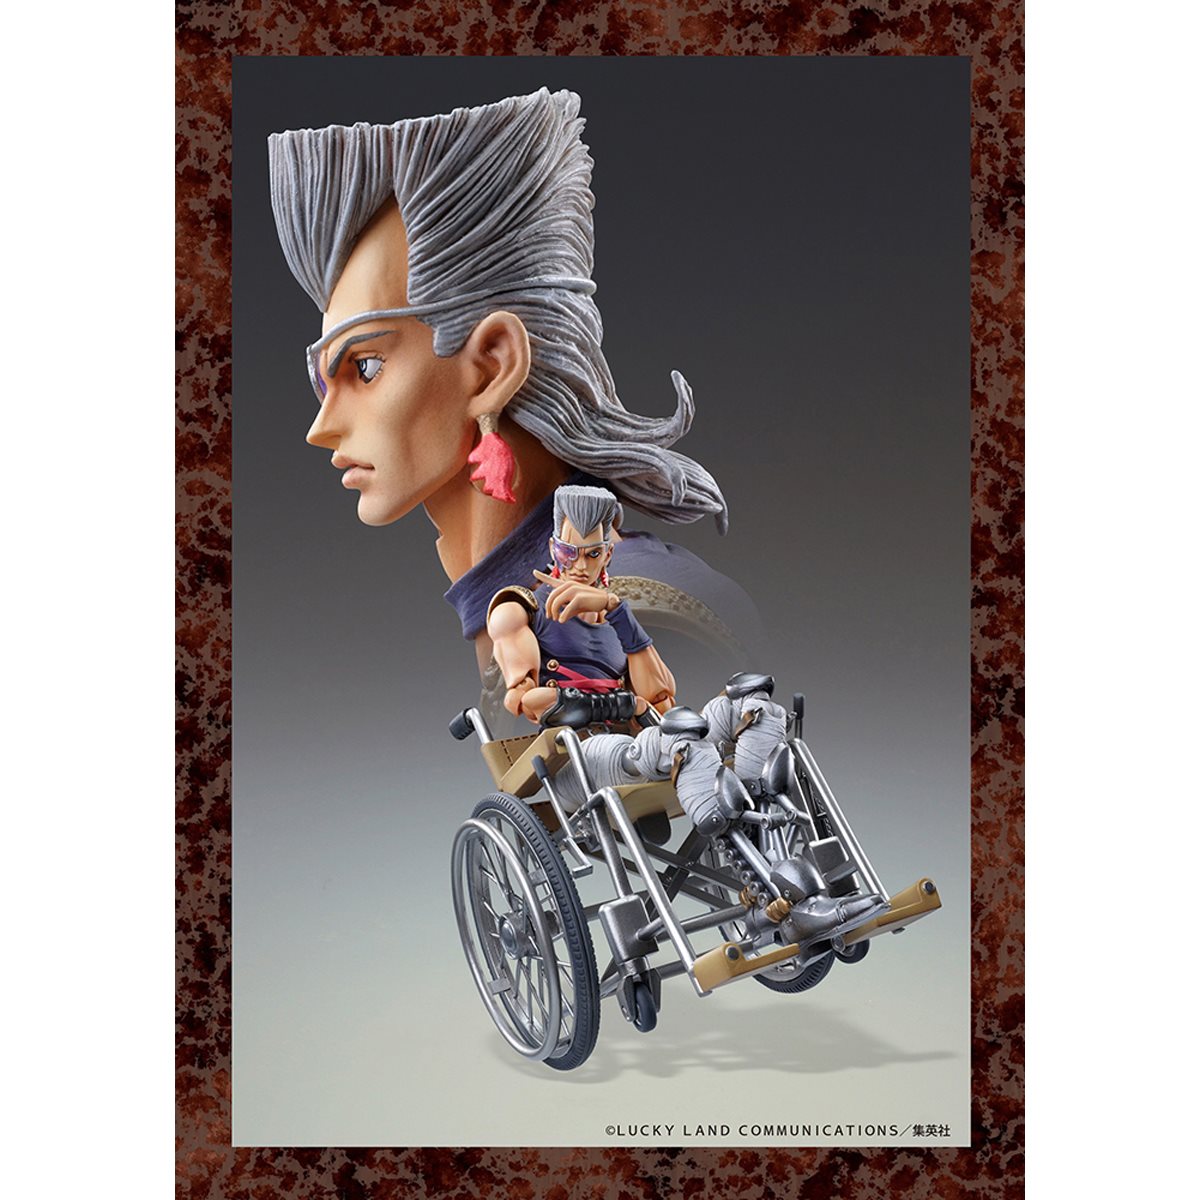 JoJo's Bizarre Adventure Silver Chariot Super Action Statue Action Figure